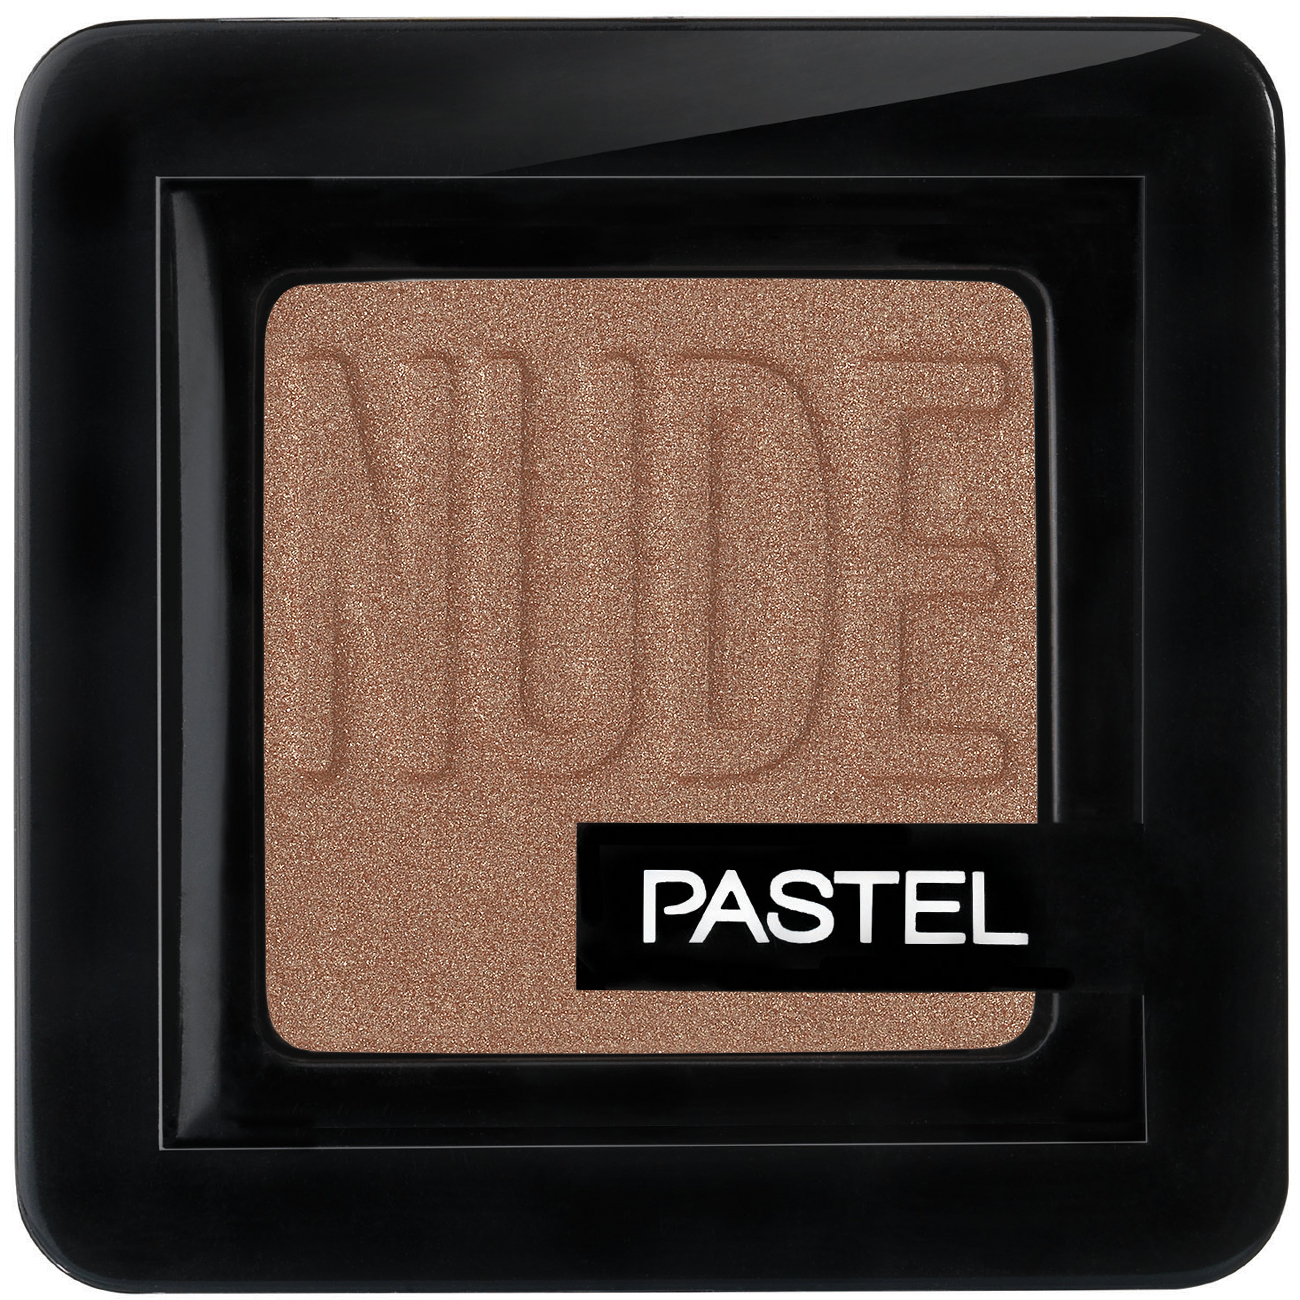 Pastel Nude Single Eyeshadow - Tekli Far 83 Chic